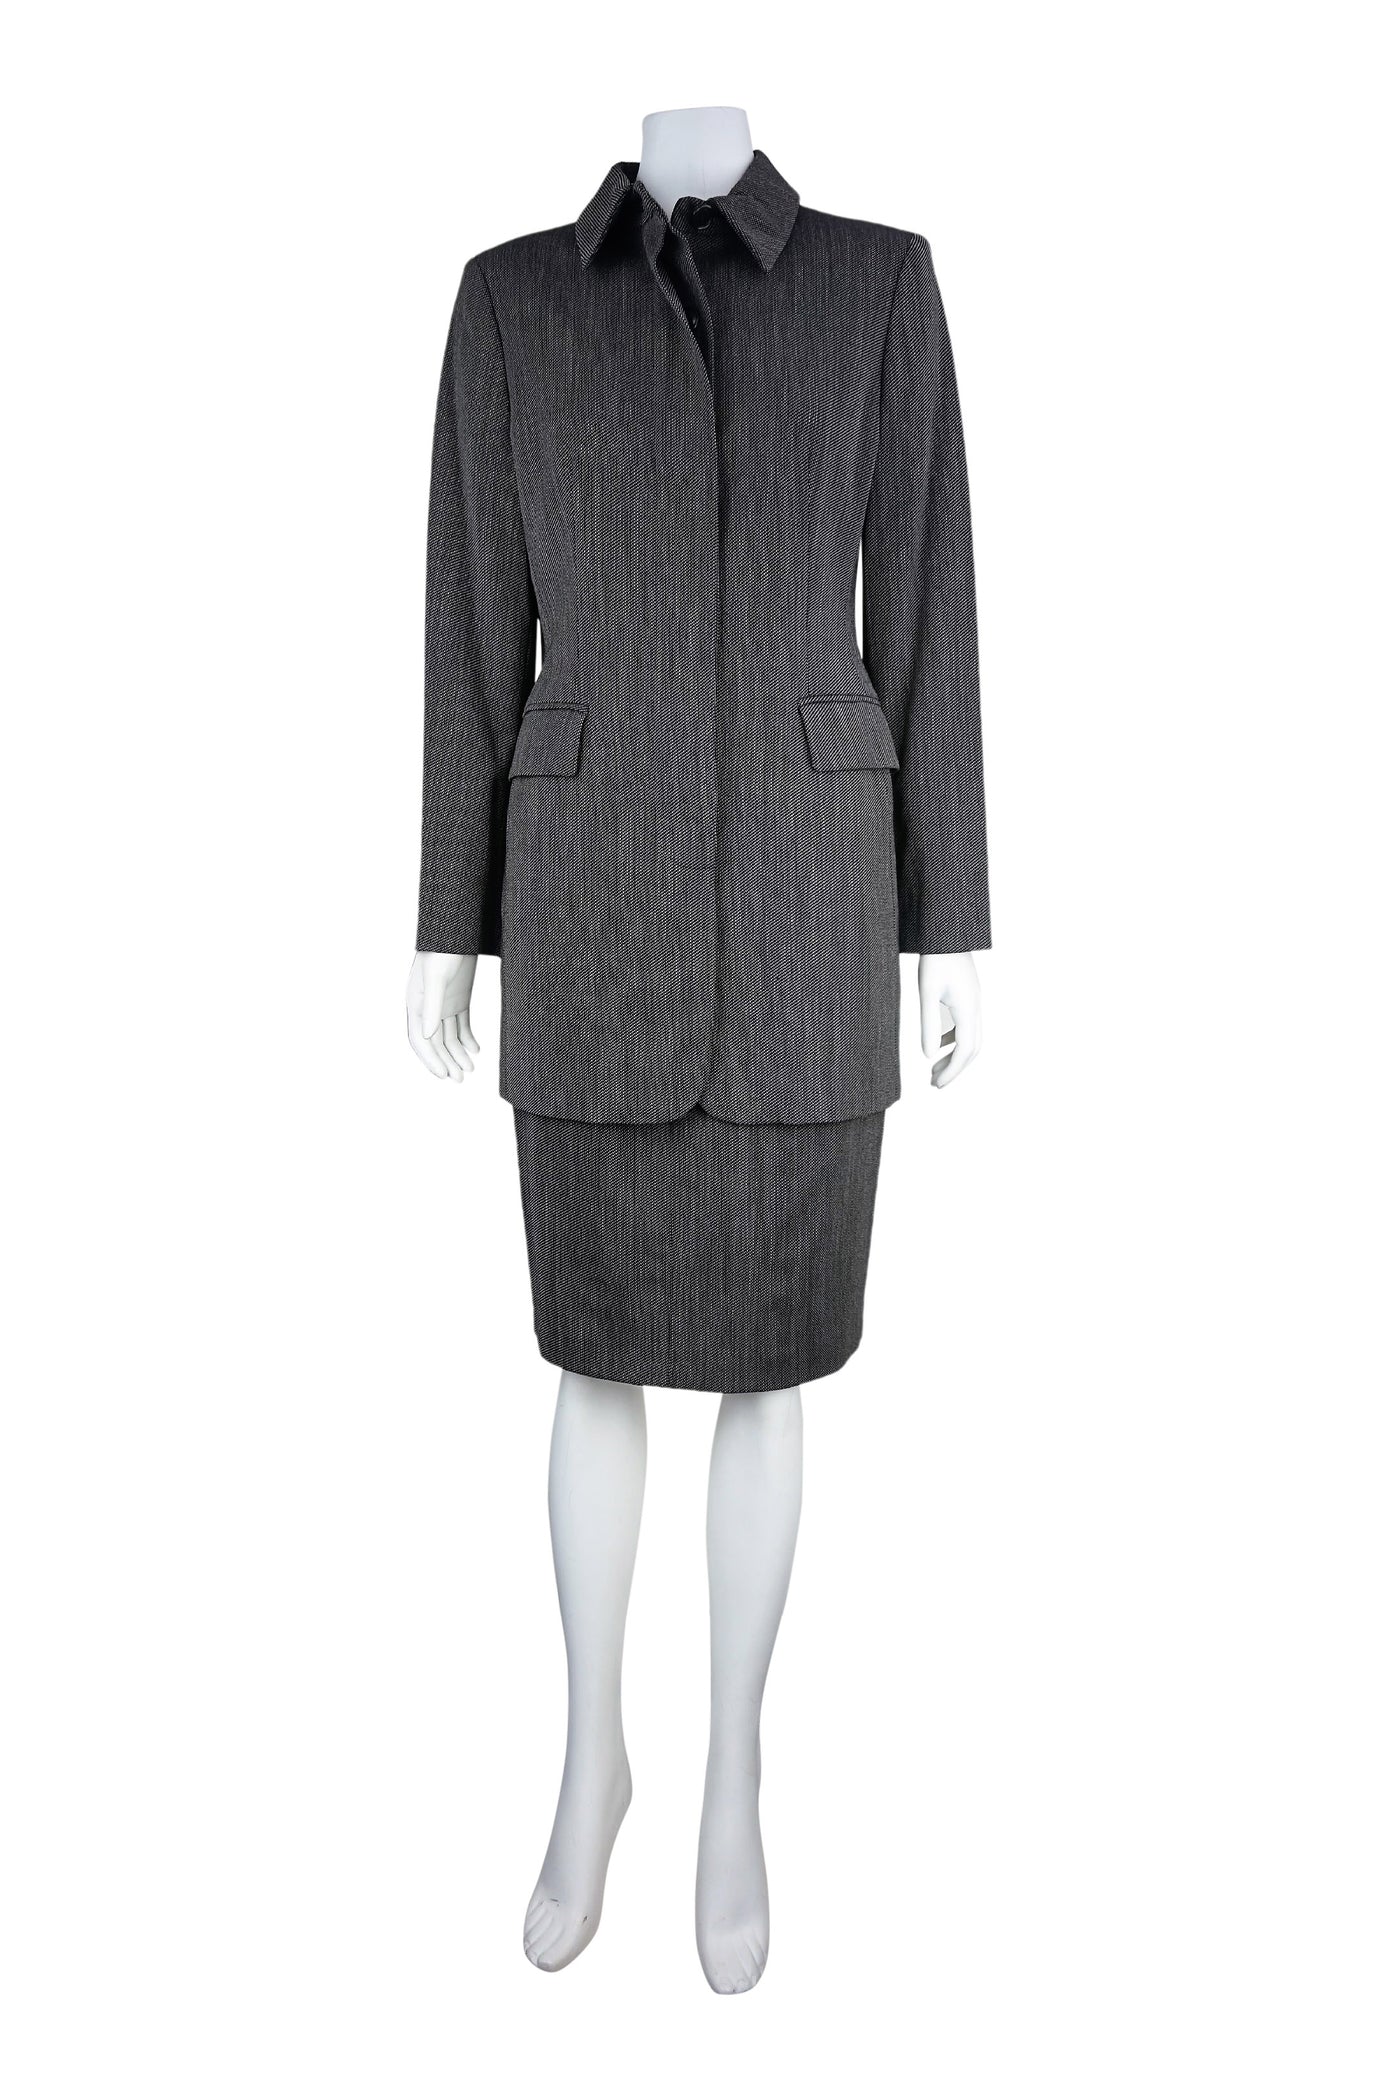 Grey barleycorn tweed suit